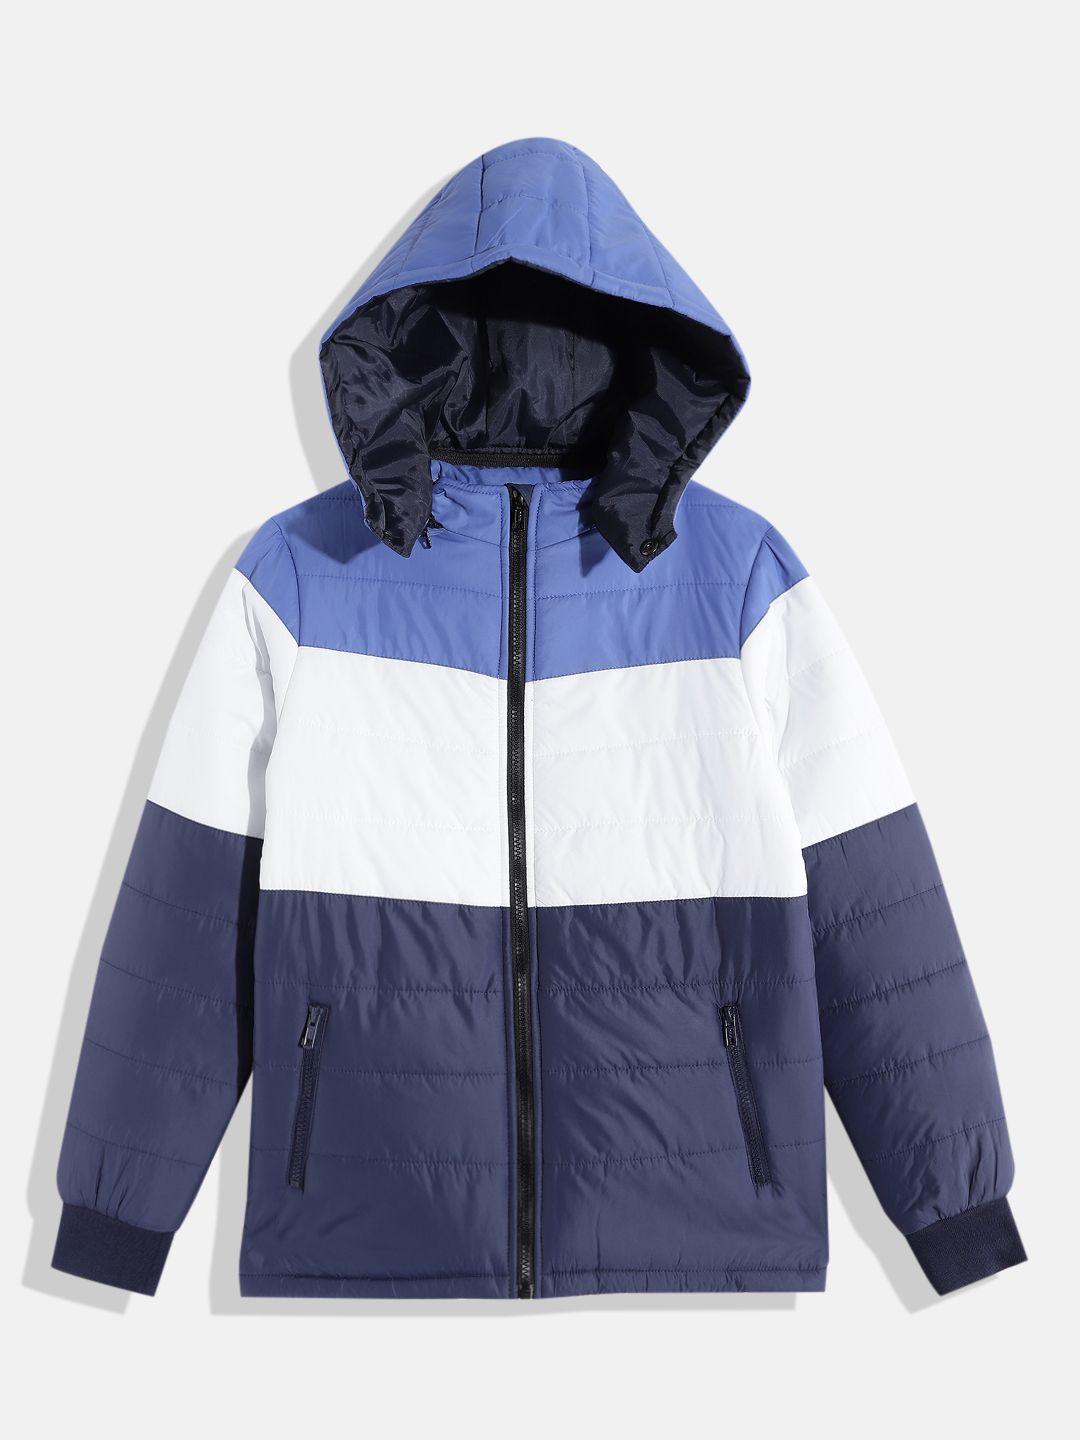 kook n keech teens boys blue & white striped hooded padded jacket